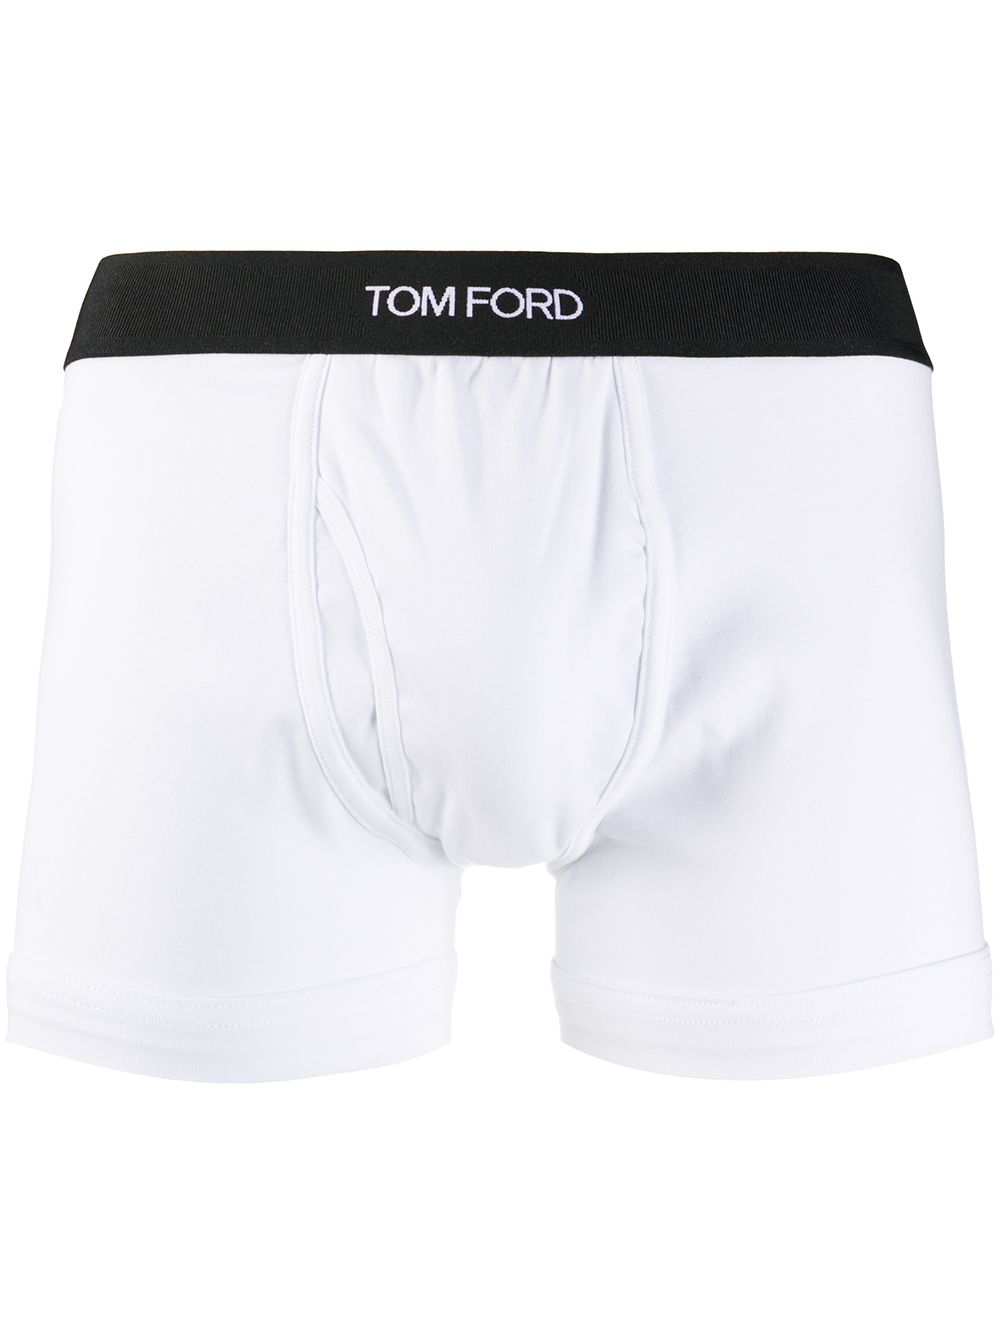 TOM FORD Logo Boxers White - MAISONDEFASHION.COM